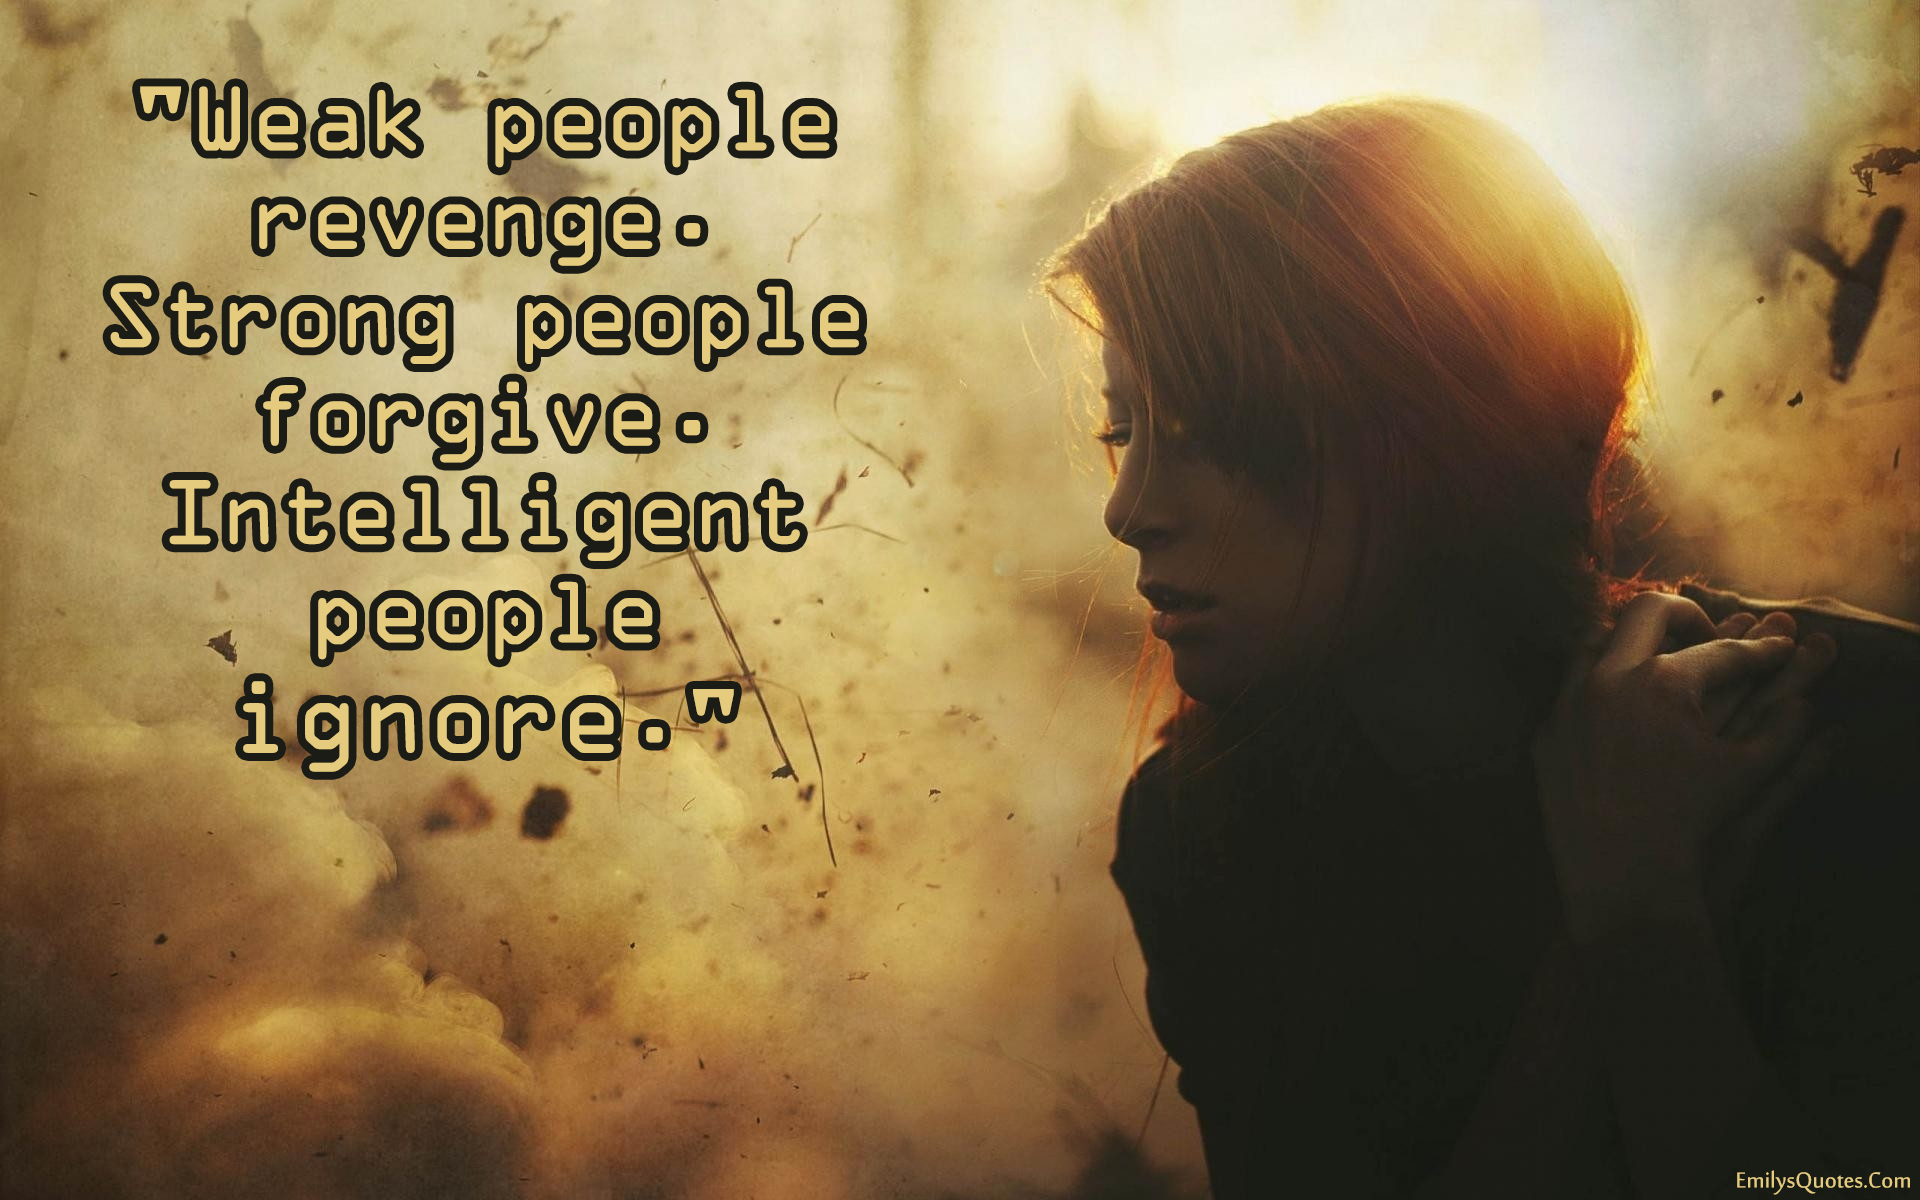 Weak people revenge. Strong people forgive. Intelligent people ignore